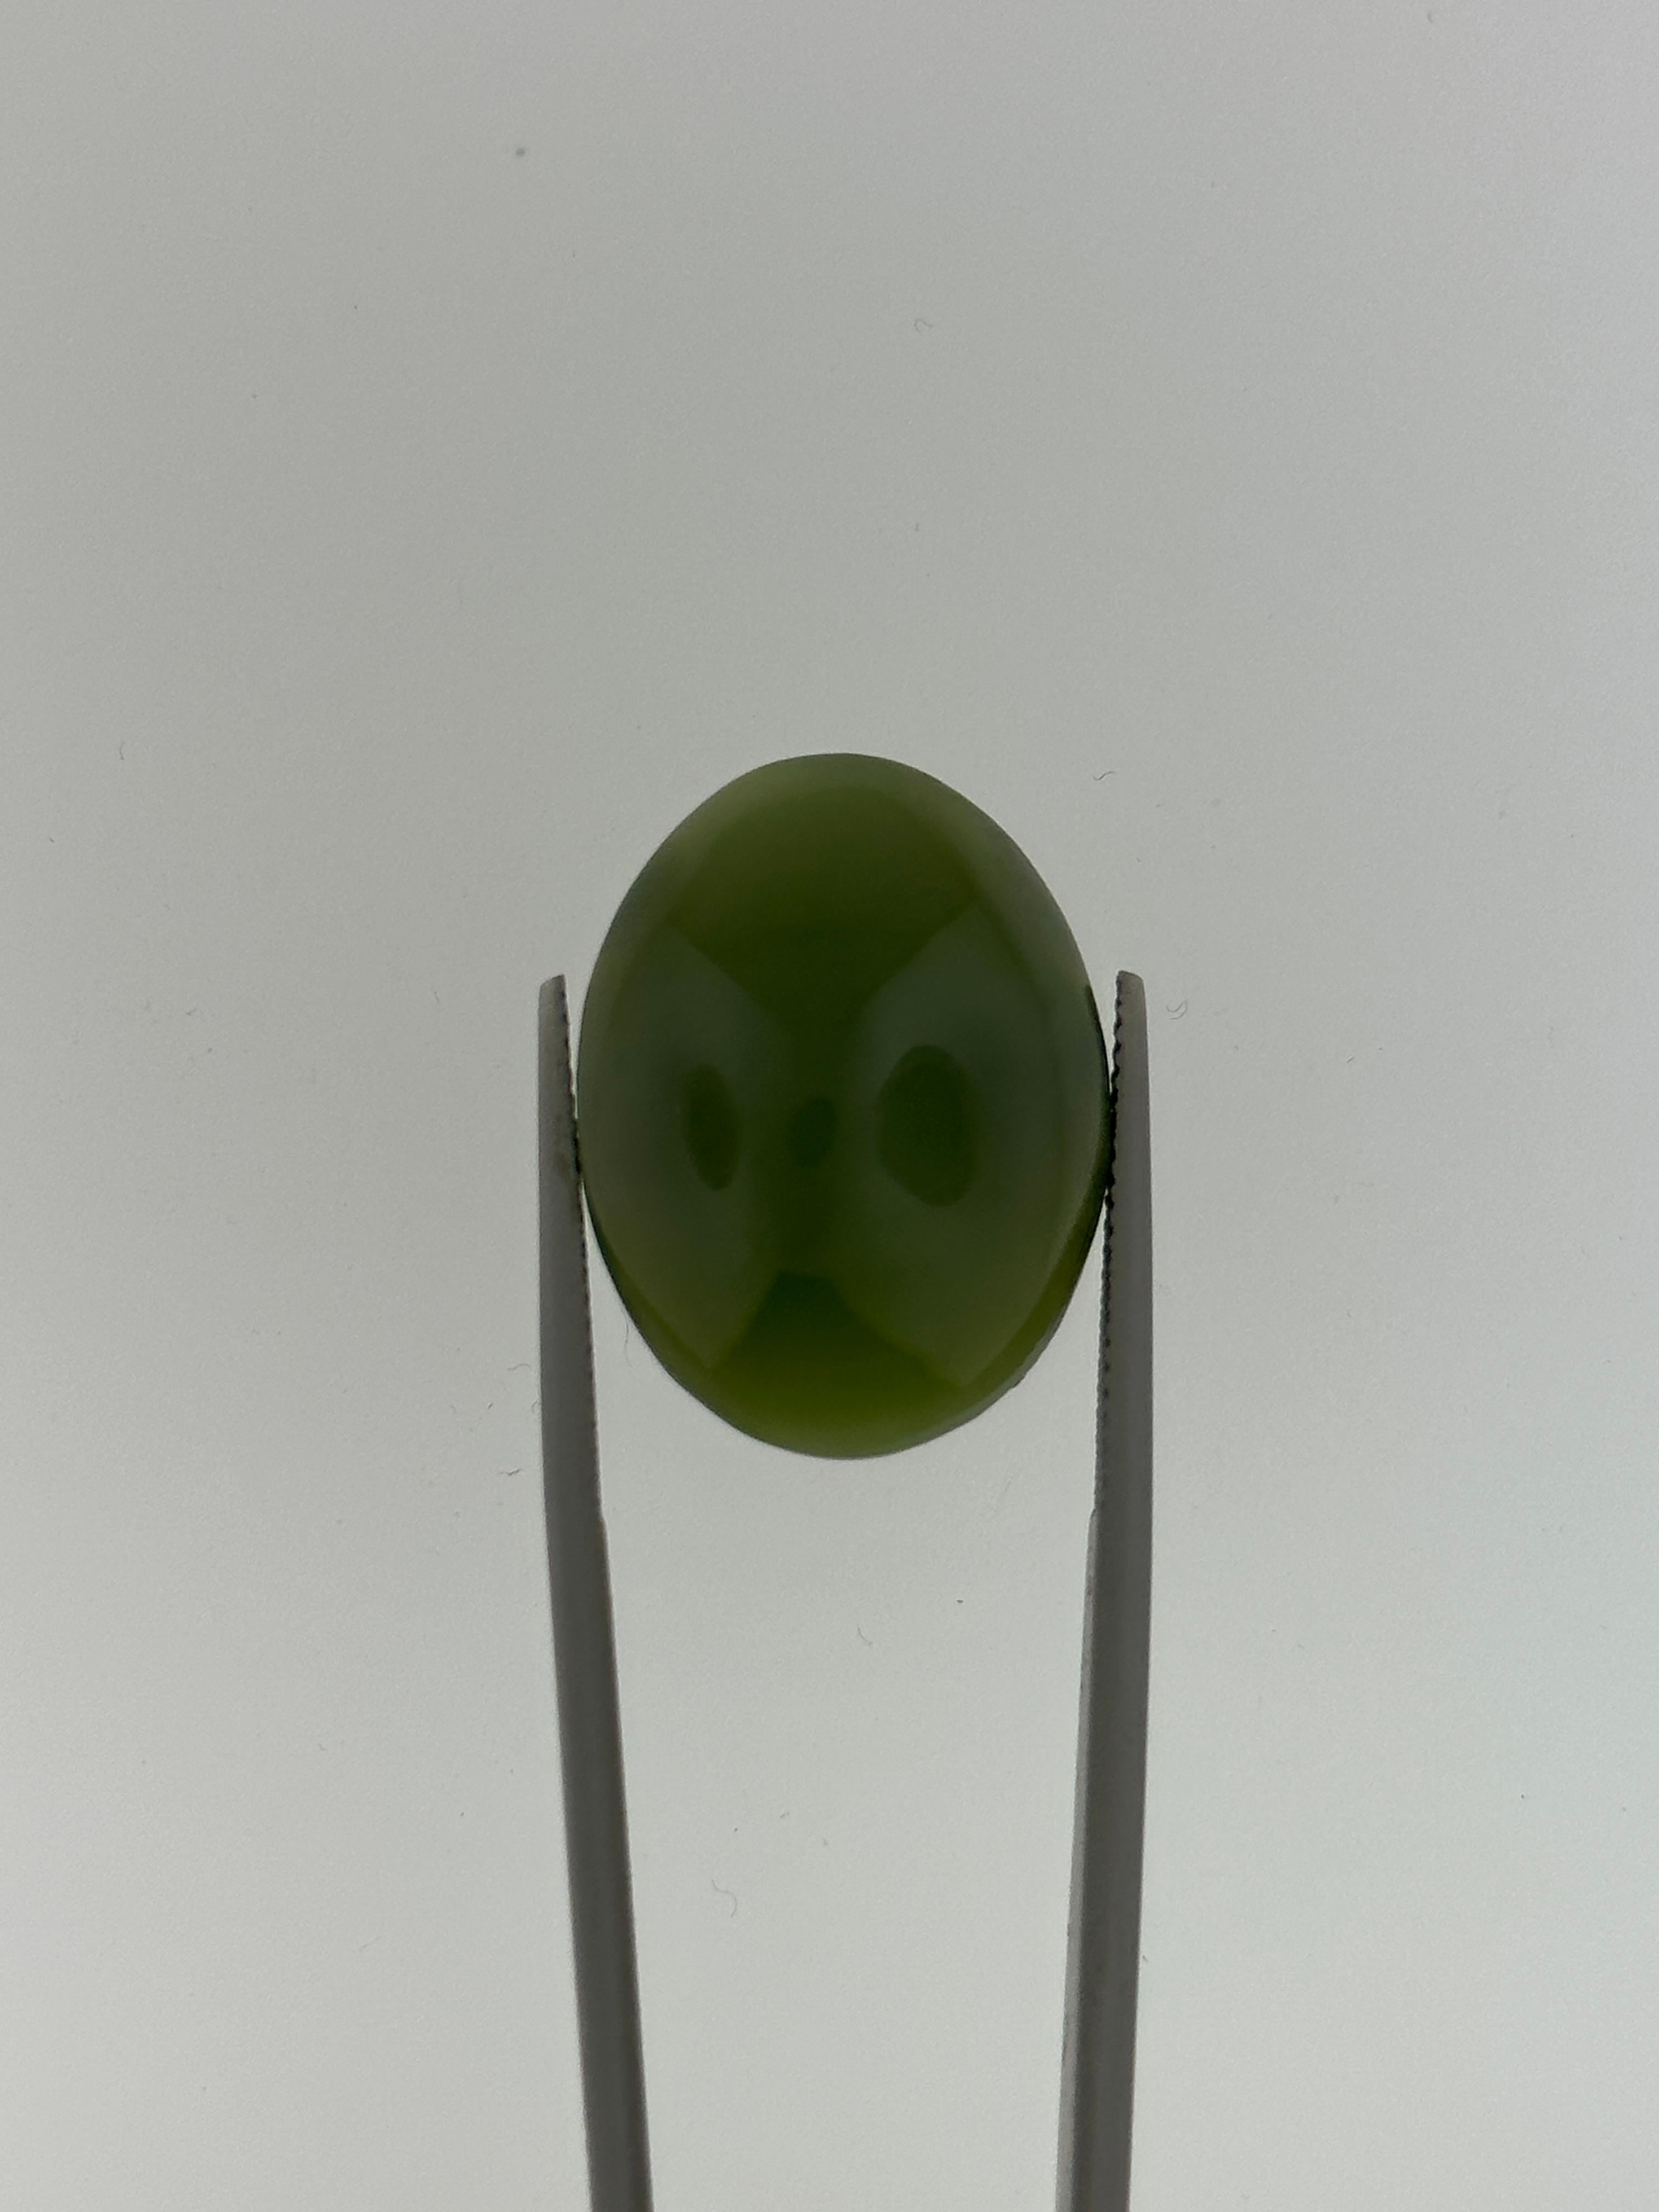 NO RESERVE Starting bid 1 dollar !!
25.24 carat Green Nephrite Jade cabochon cut
Dimensions: 24.16 x 18.36 x 7.22 mm
Cut: Cabochon Oval
Weight: 25.24 carat
